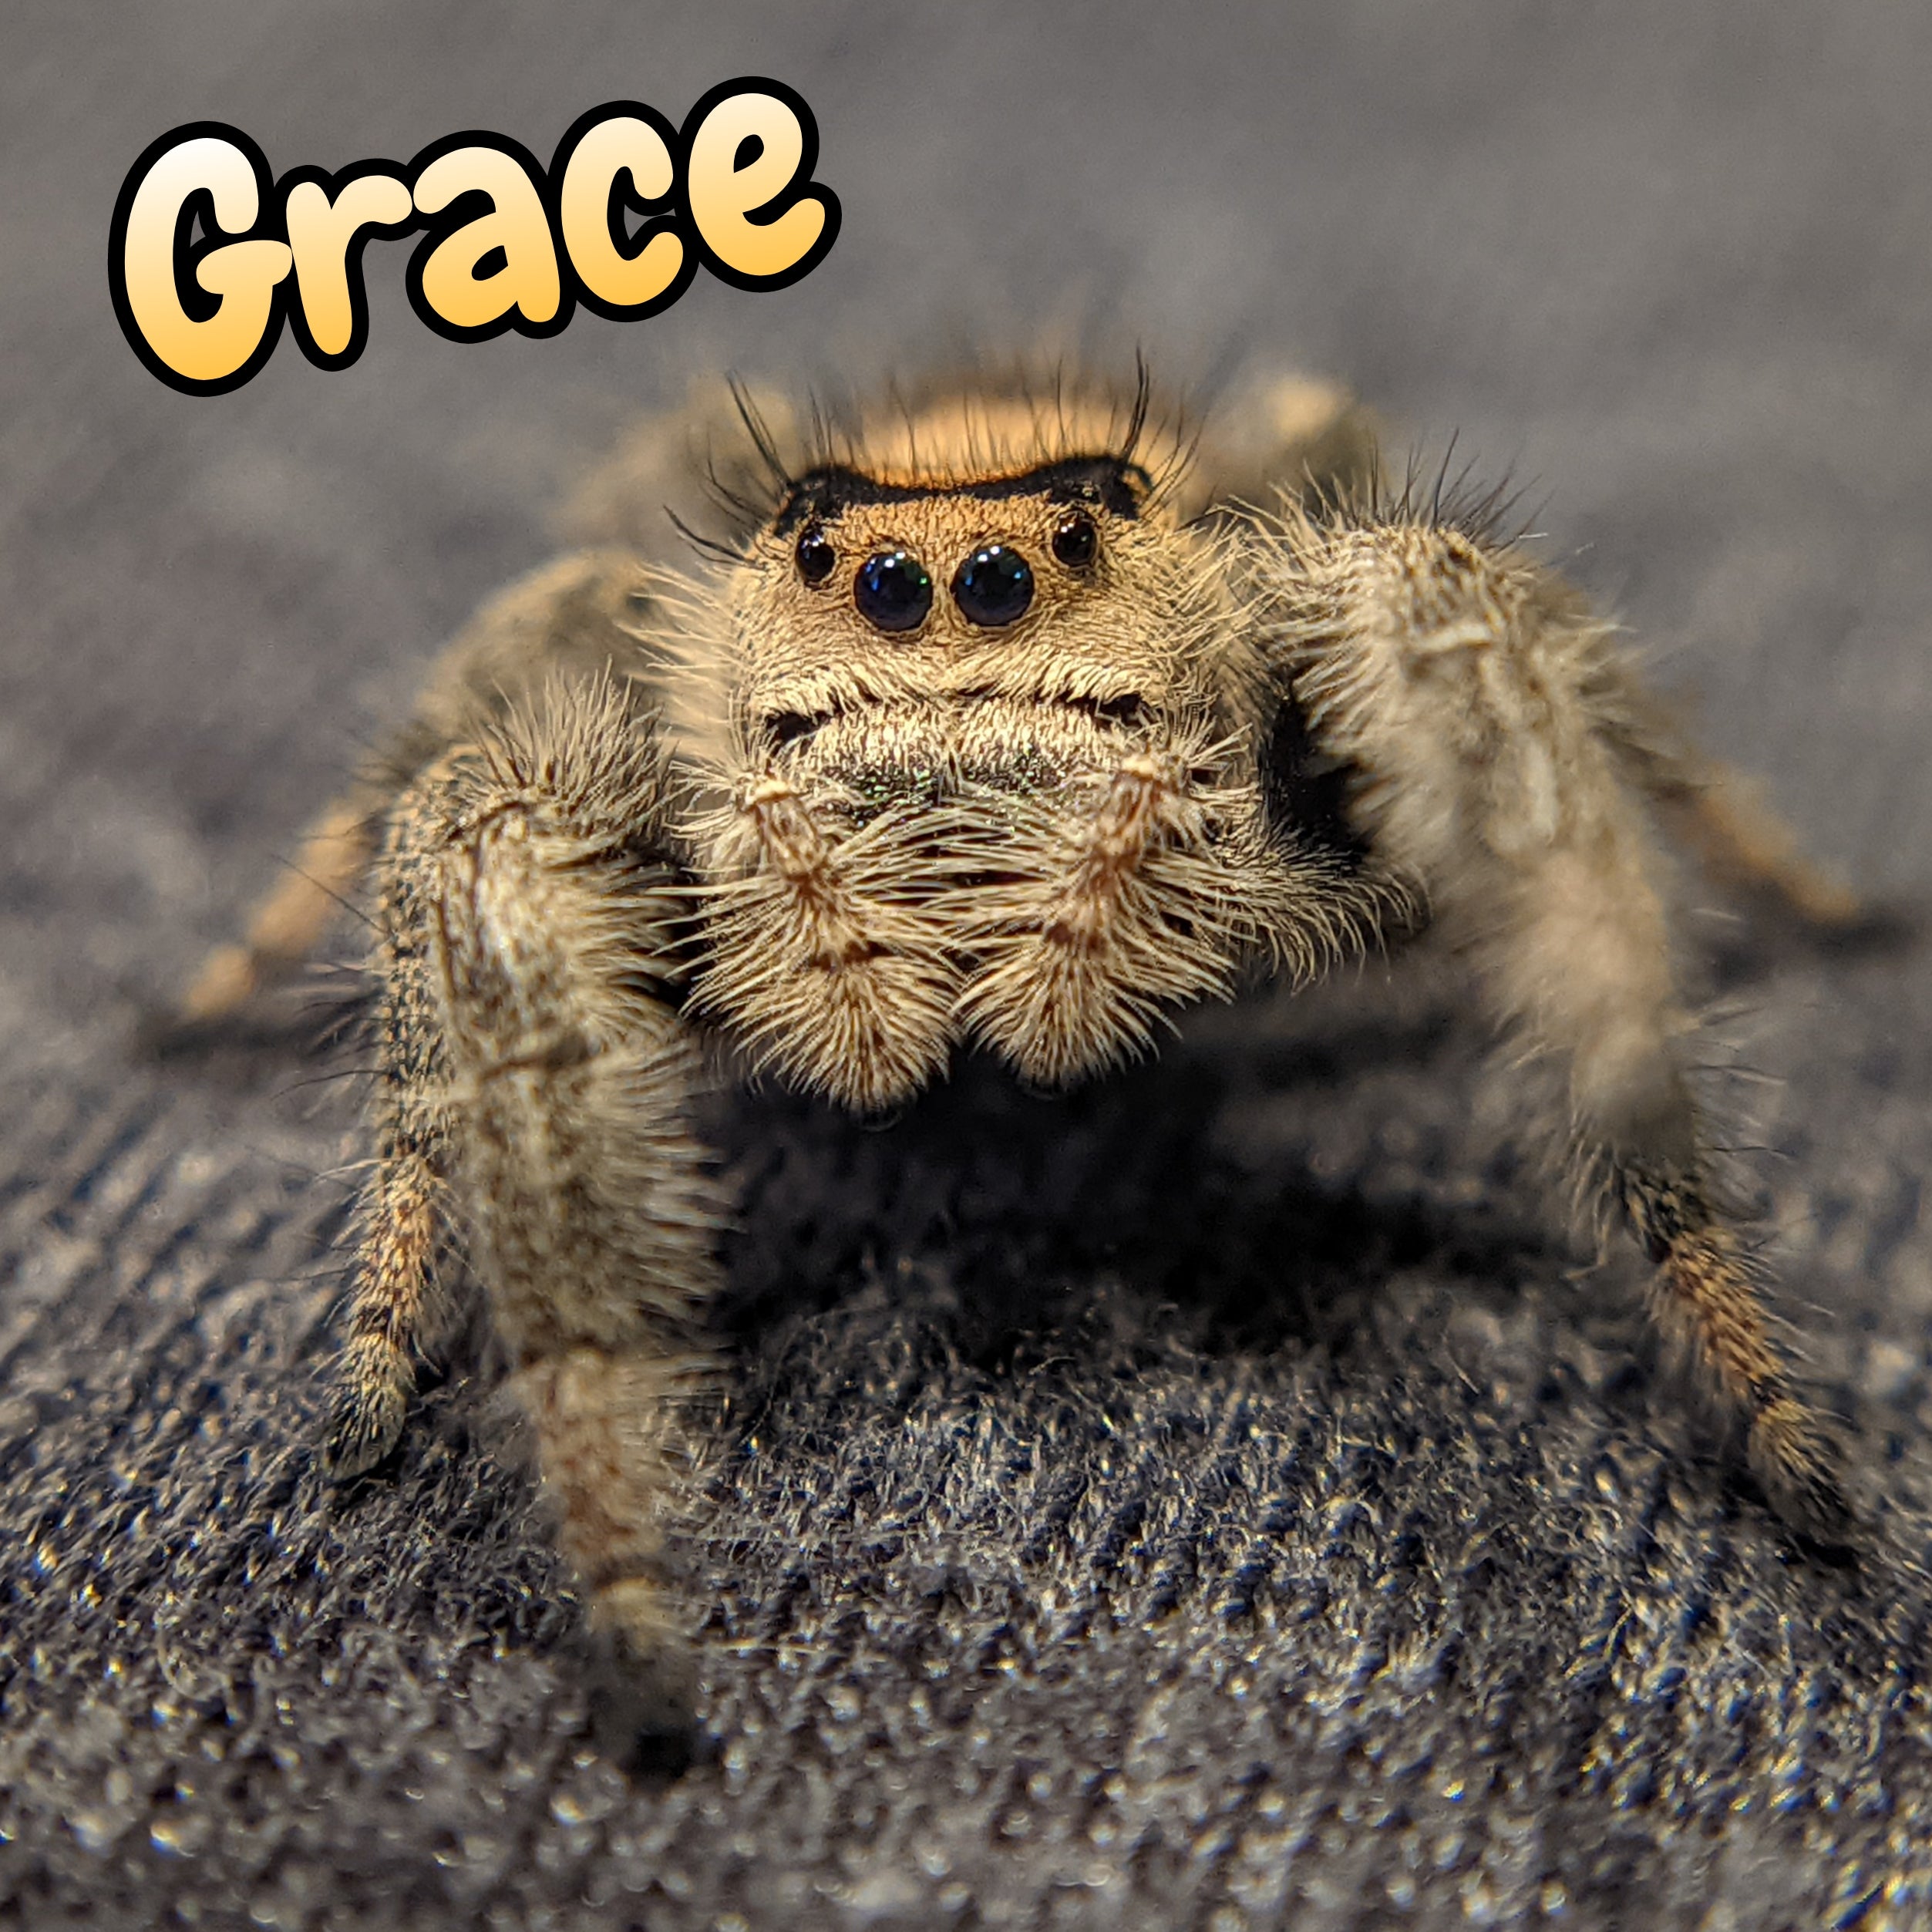 Regal Jumping Spider "Grace"